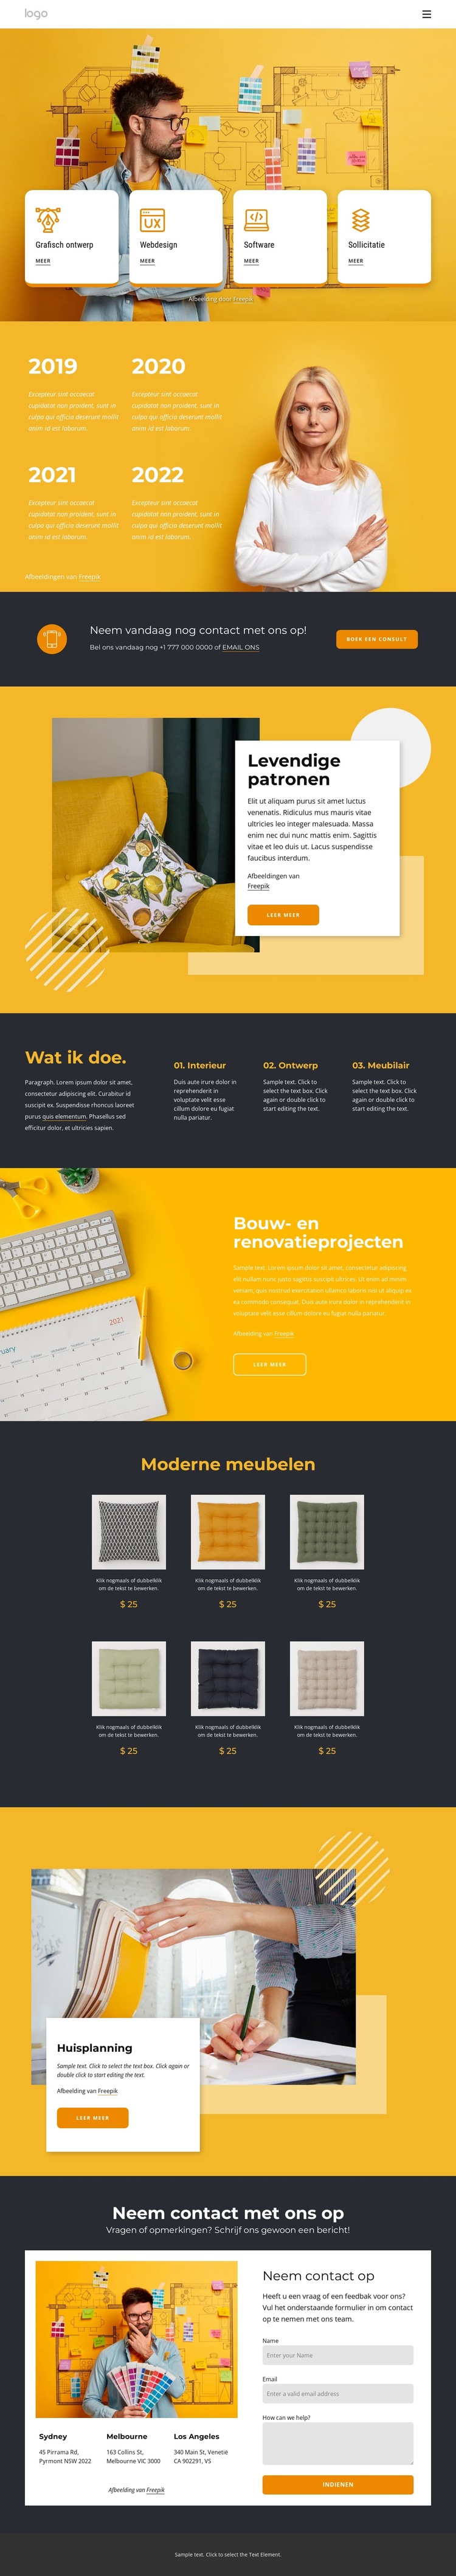 Modern ontwerpbureau Website sjabloon